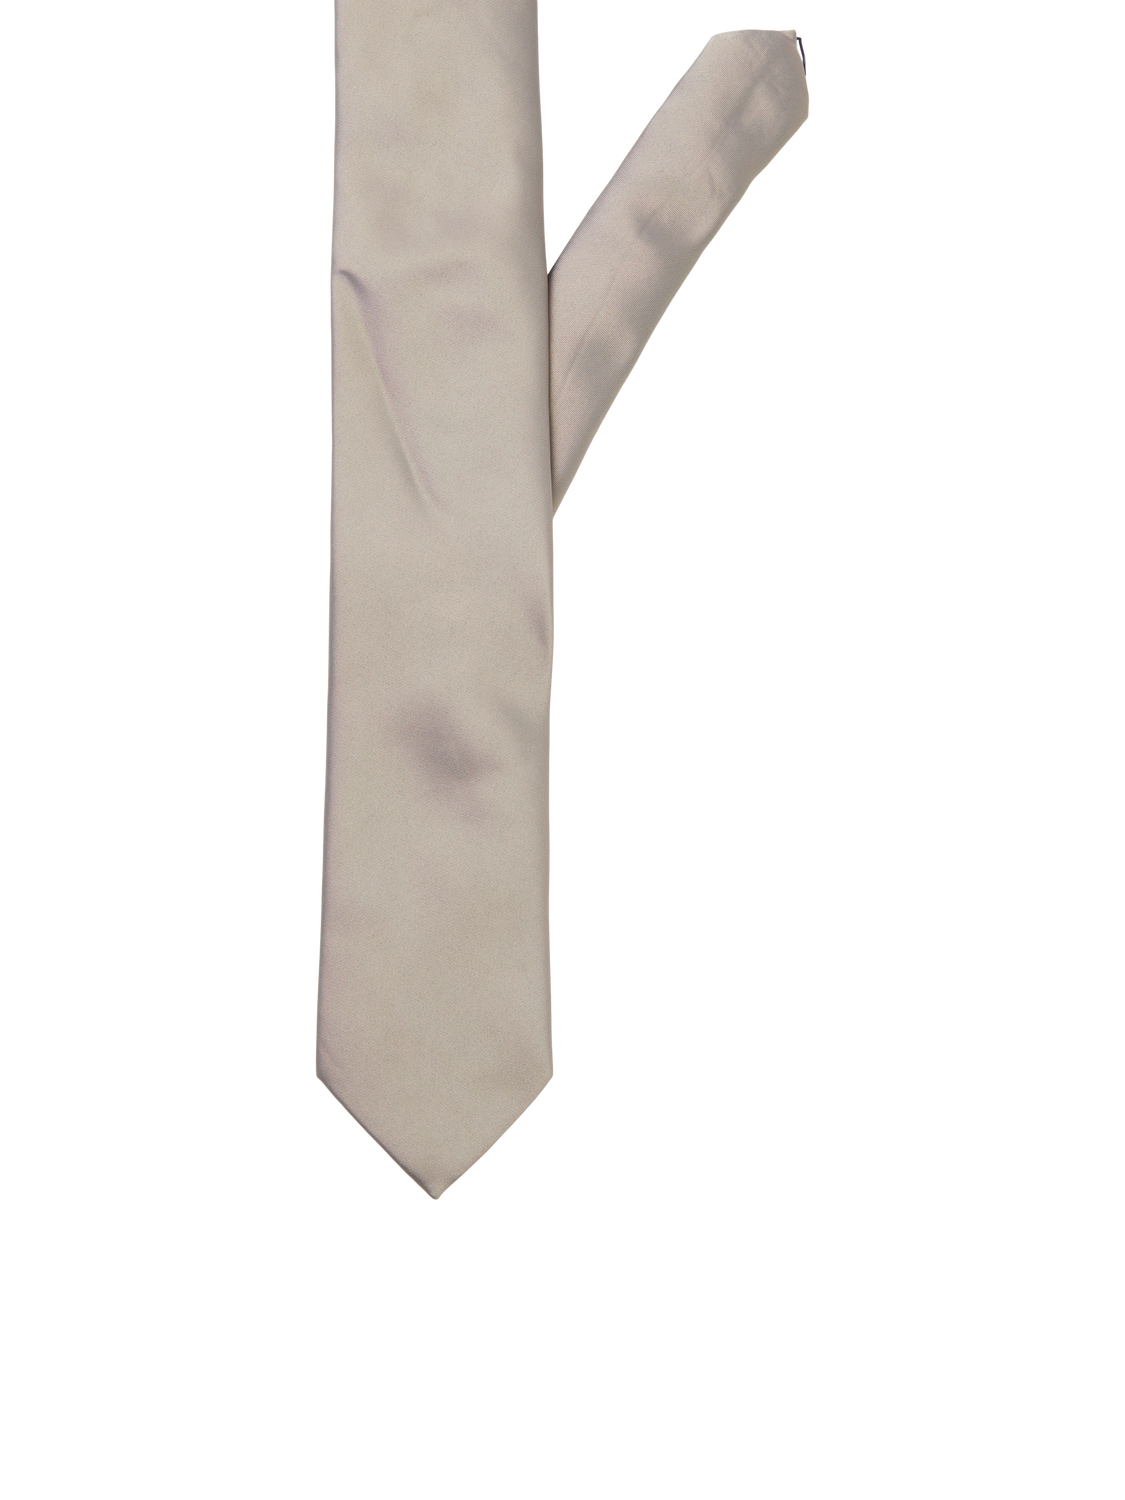 JACSOLID Tie - Pure Cashmere